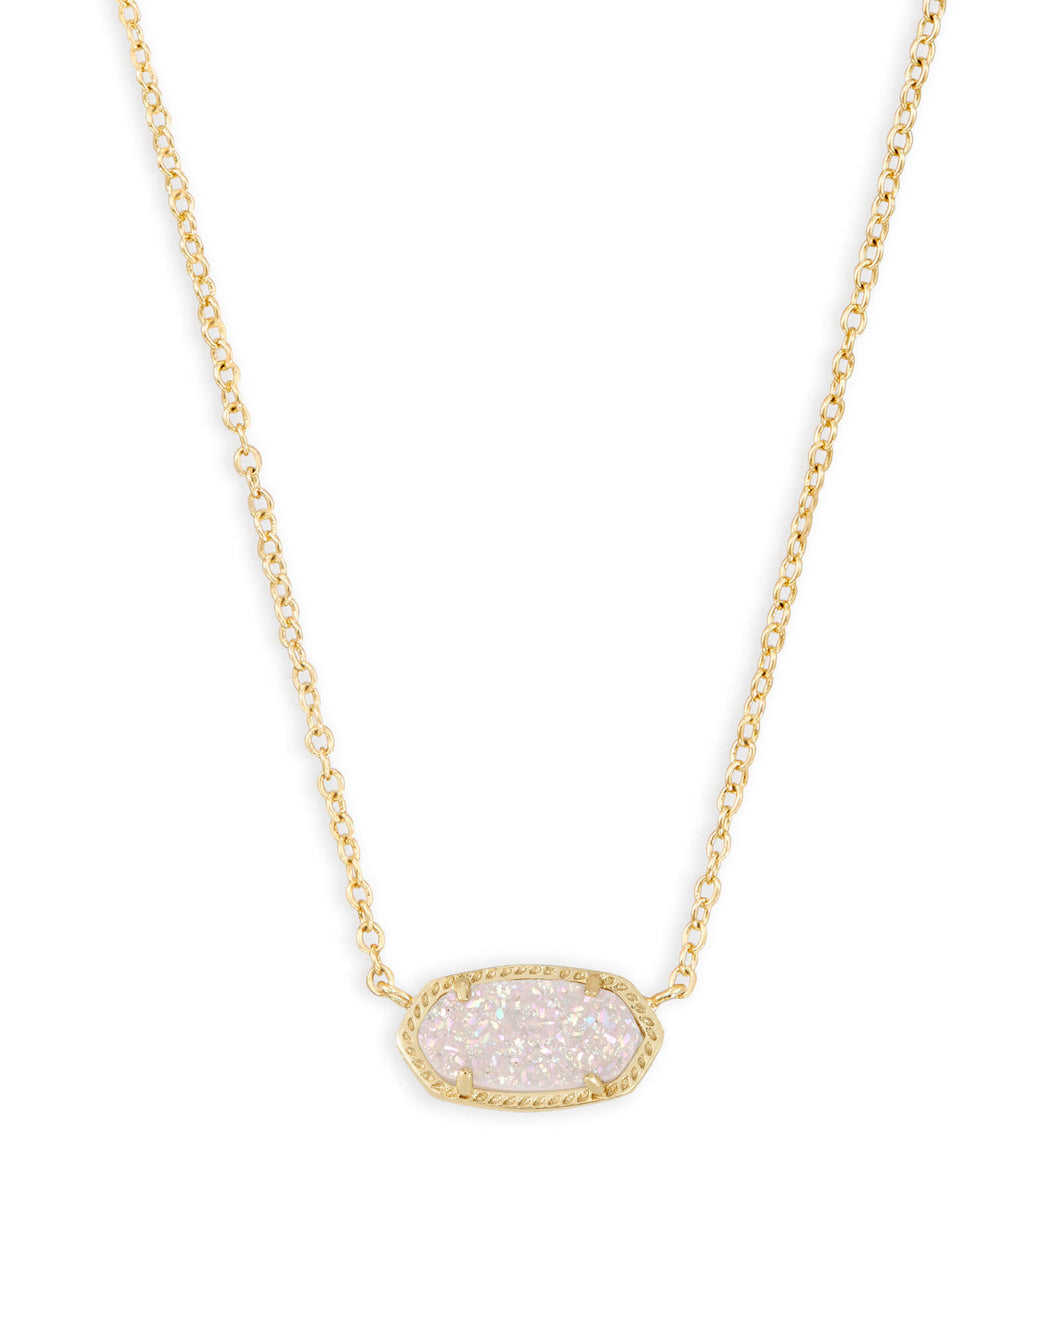 Kendra Scott Elisa Gold Short Pendant Necklace in Iridescent Drusy